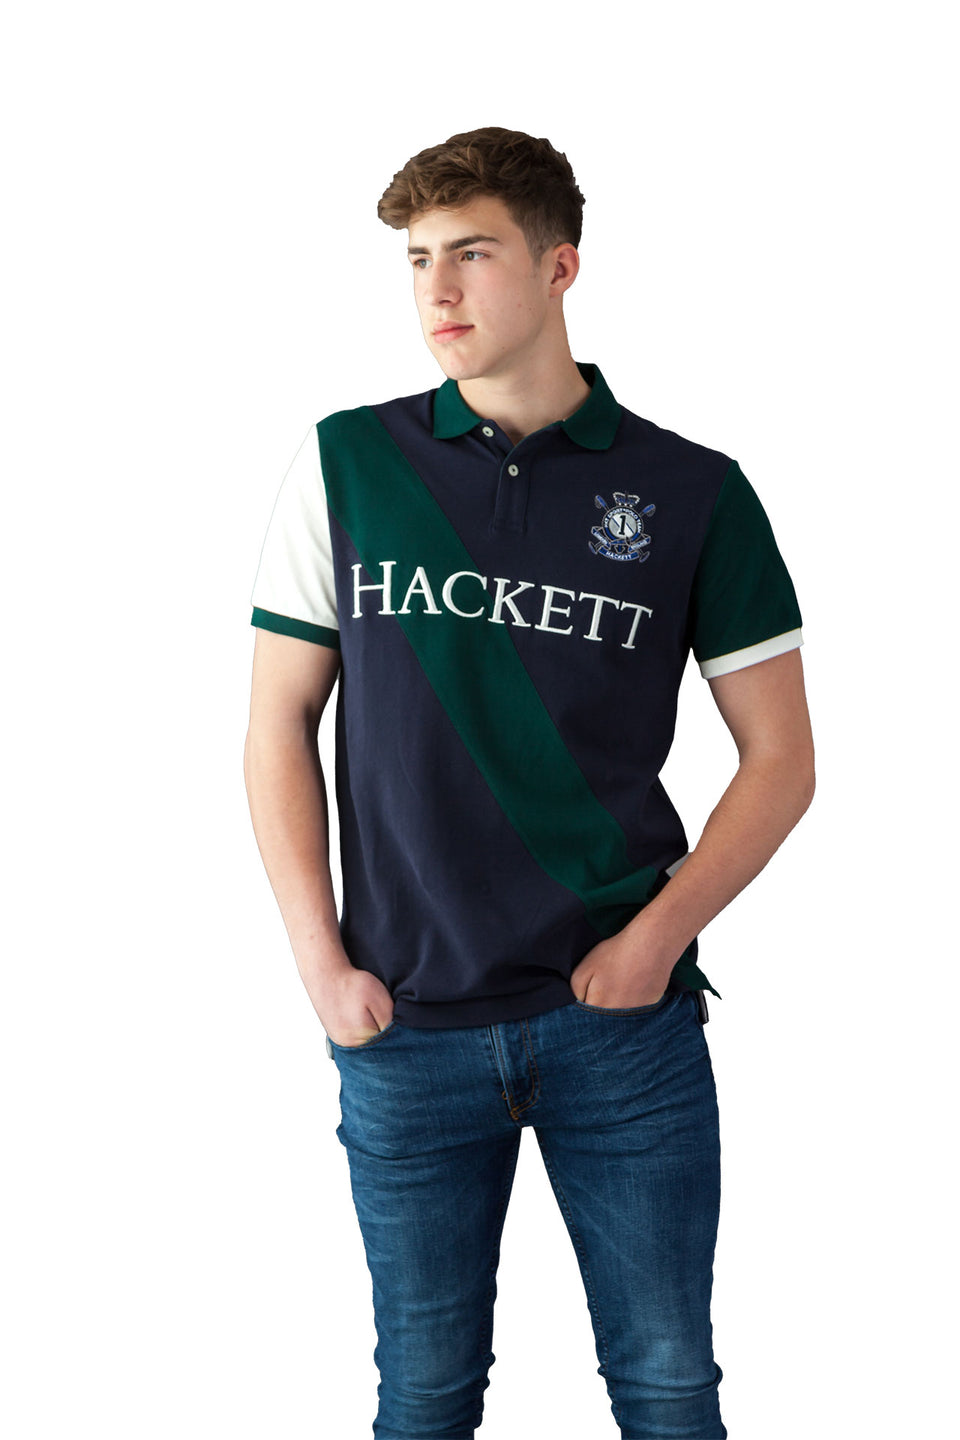 Hackett Sash Polo Navy And Green Shirt - Camden Connaught